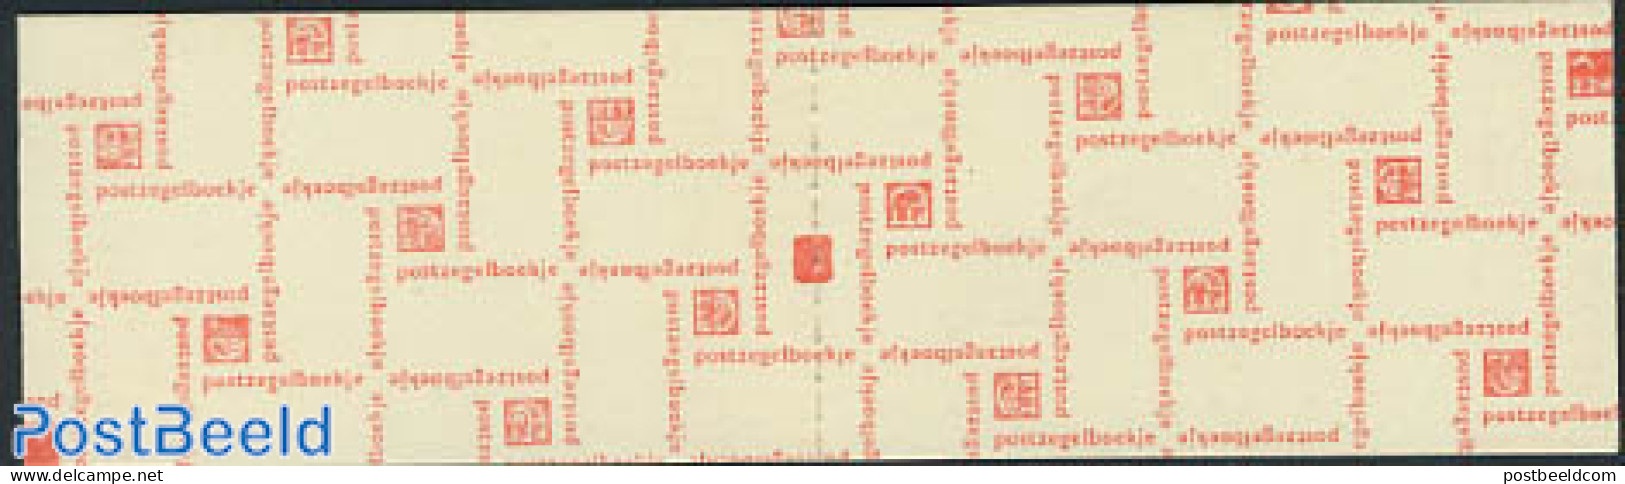 Netherlands 1969 4x25c Booklet, Norm.paper, Count Block, Postgiro V, Mint NH, Stamp Booklets - Ungebraucht